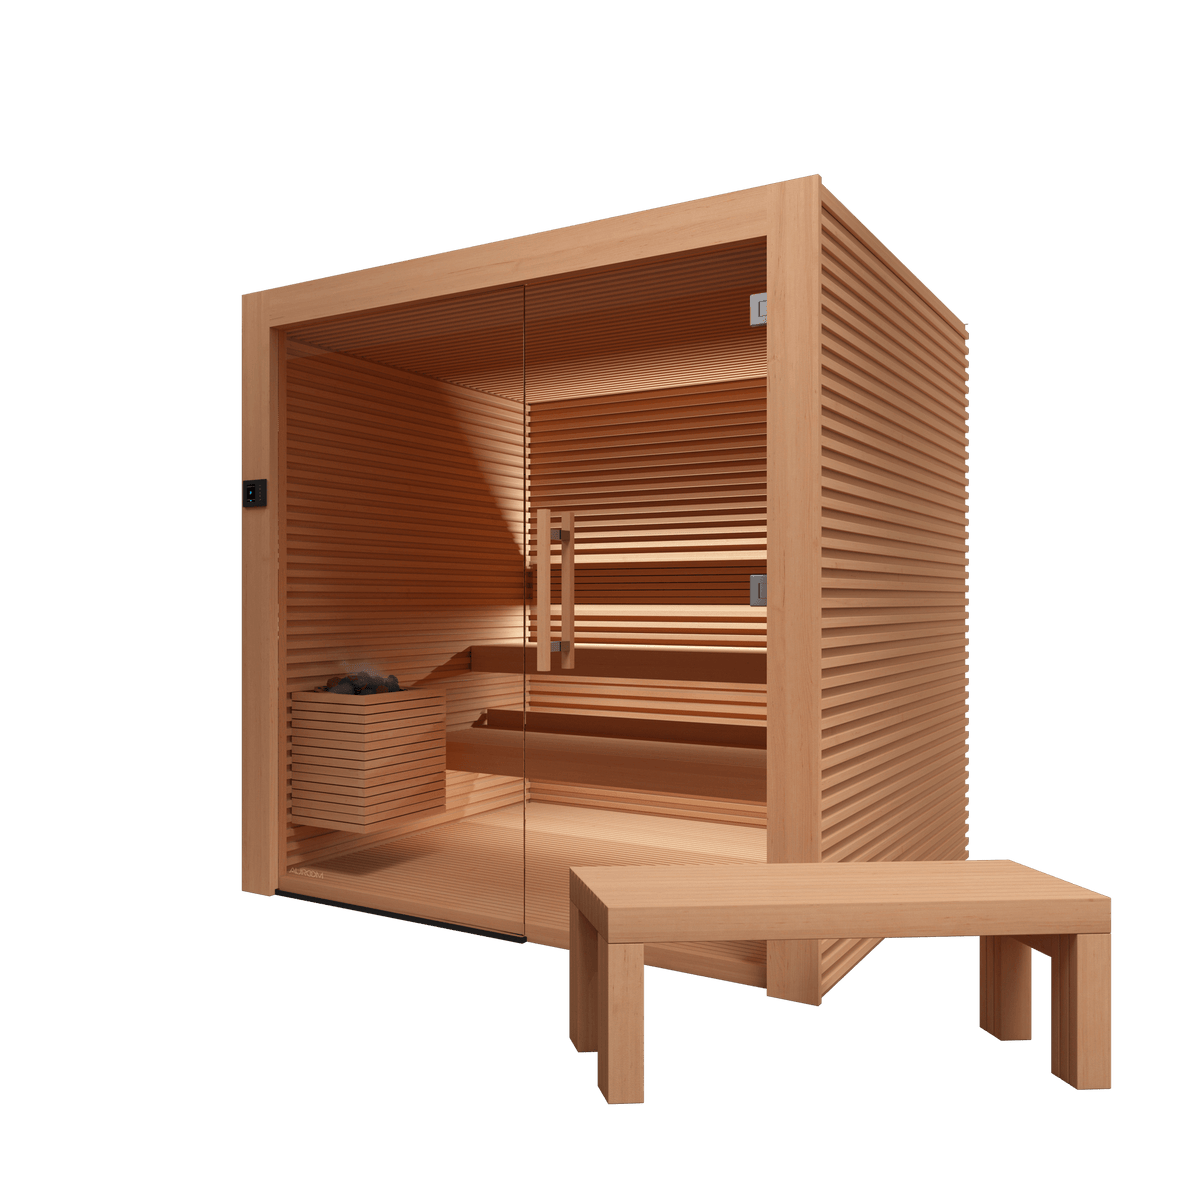 Auroom Nativa 3-Person Cabin Sauna Kit